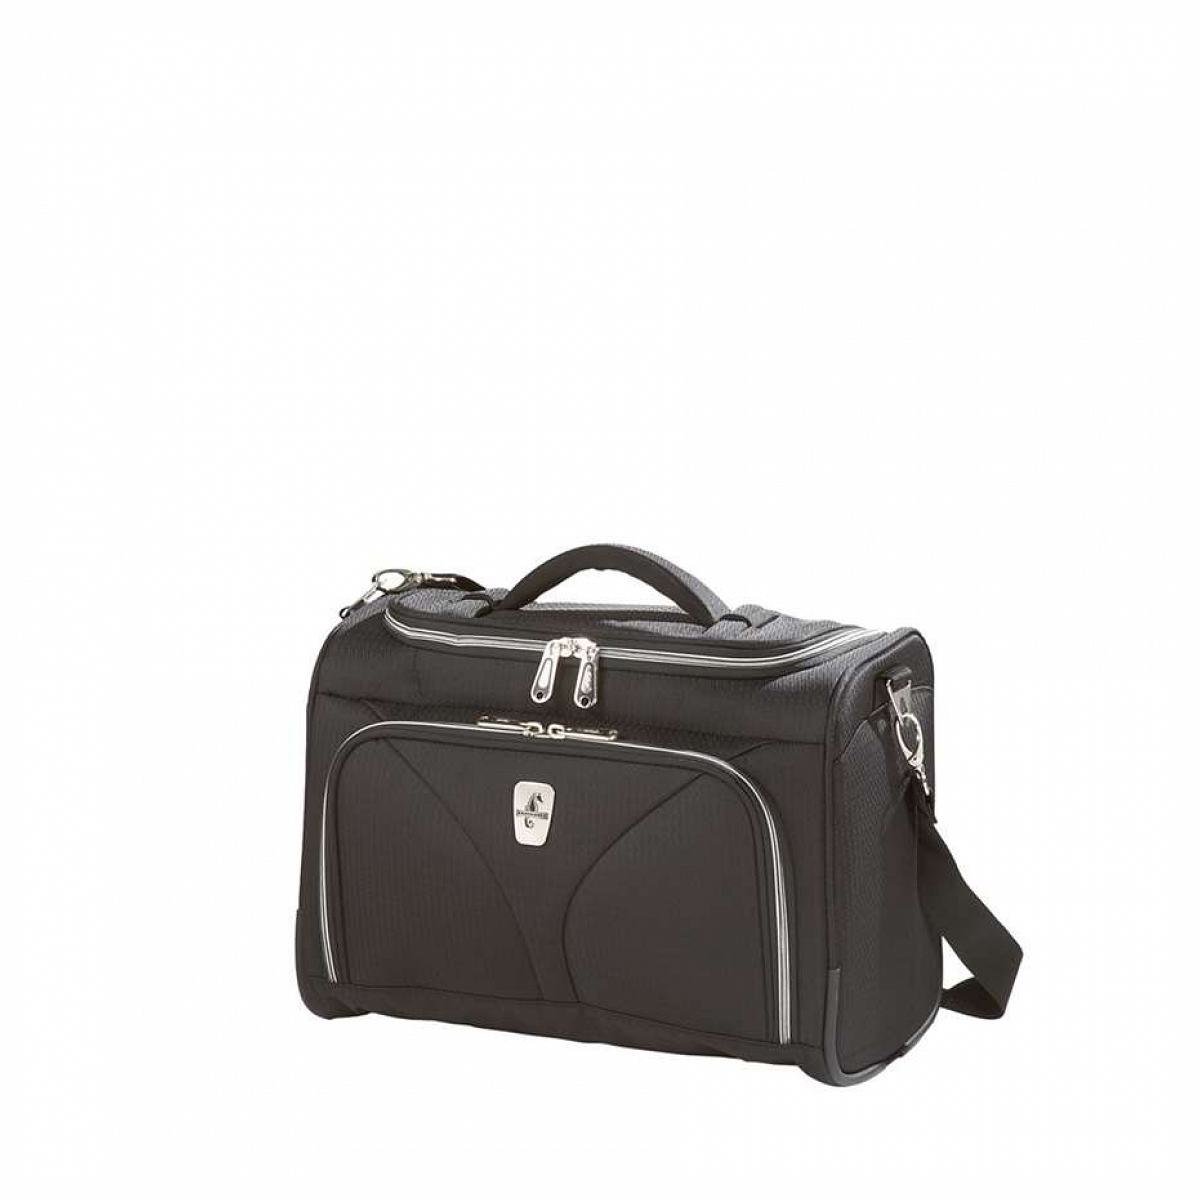 Piel Leather Tablet Cross Body Bag, Saddle - 3009